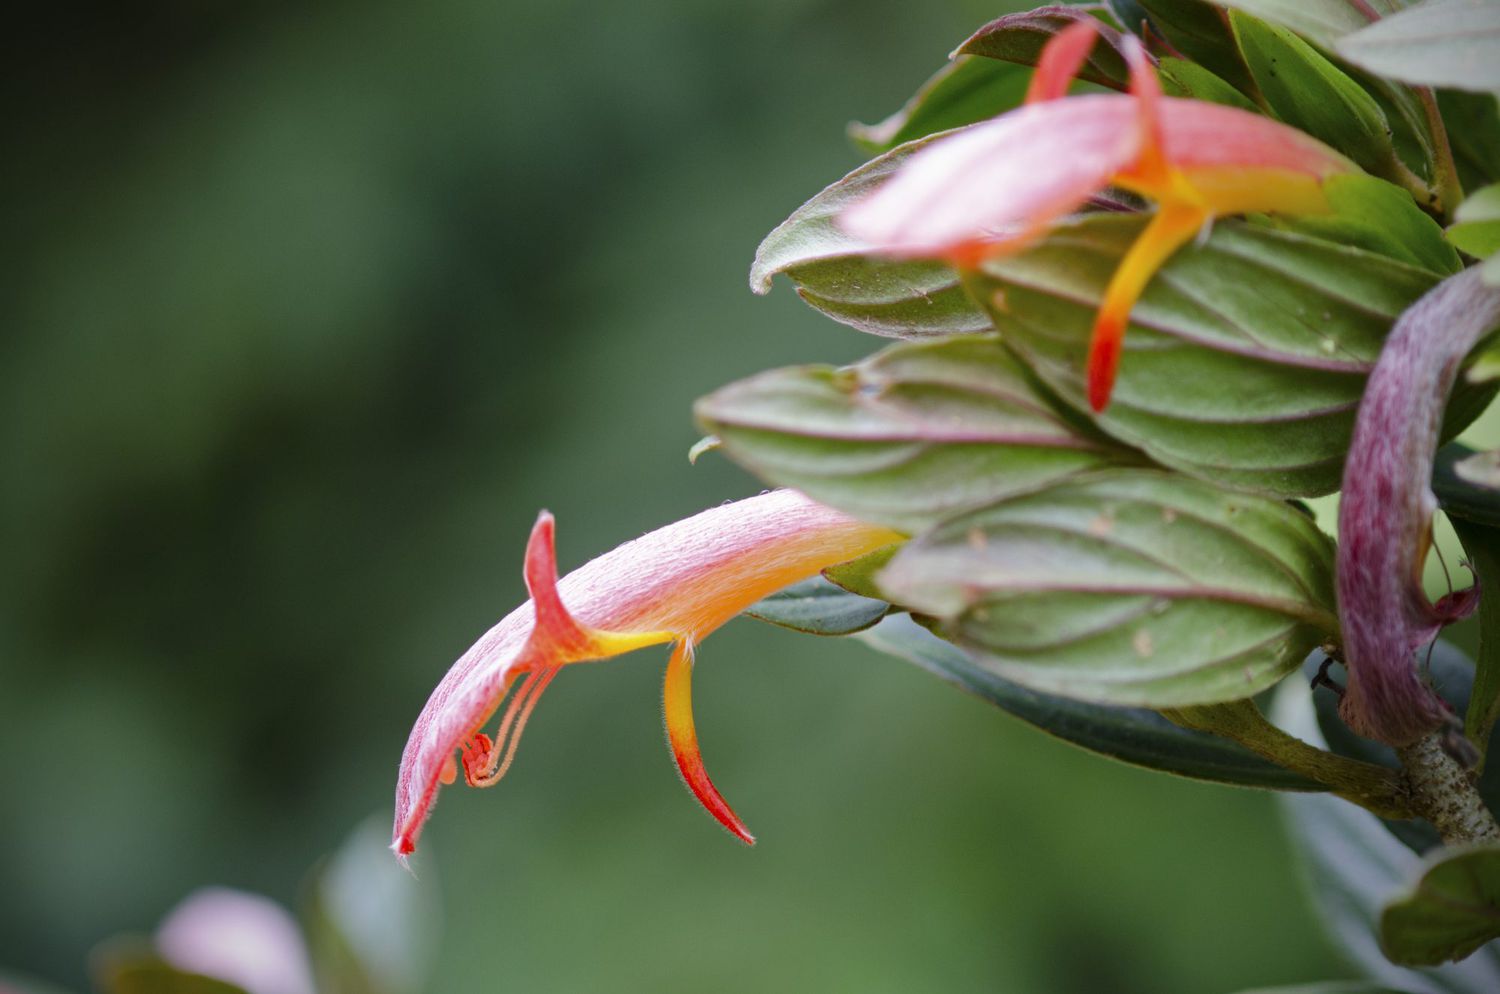 Orange flower of Columnea species Costa Rica cloud forest.